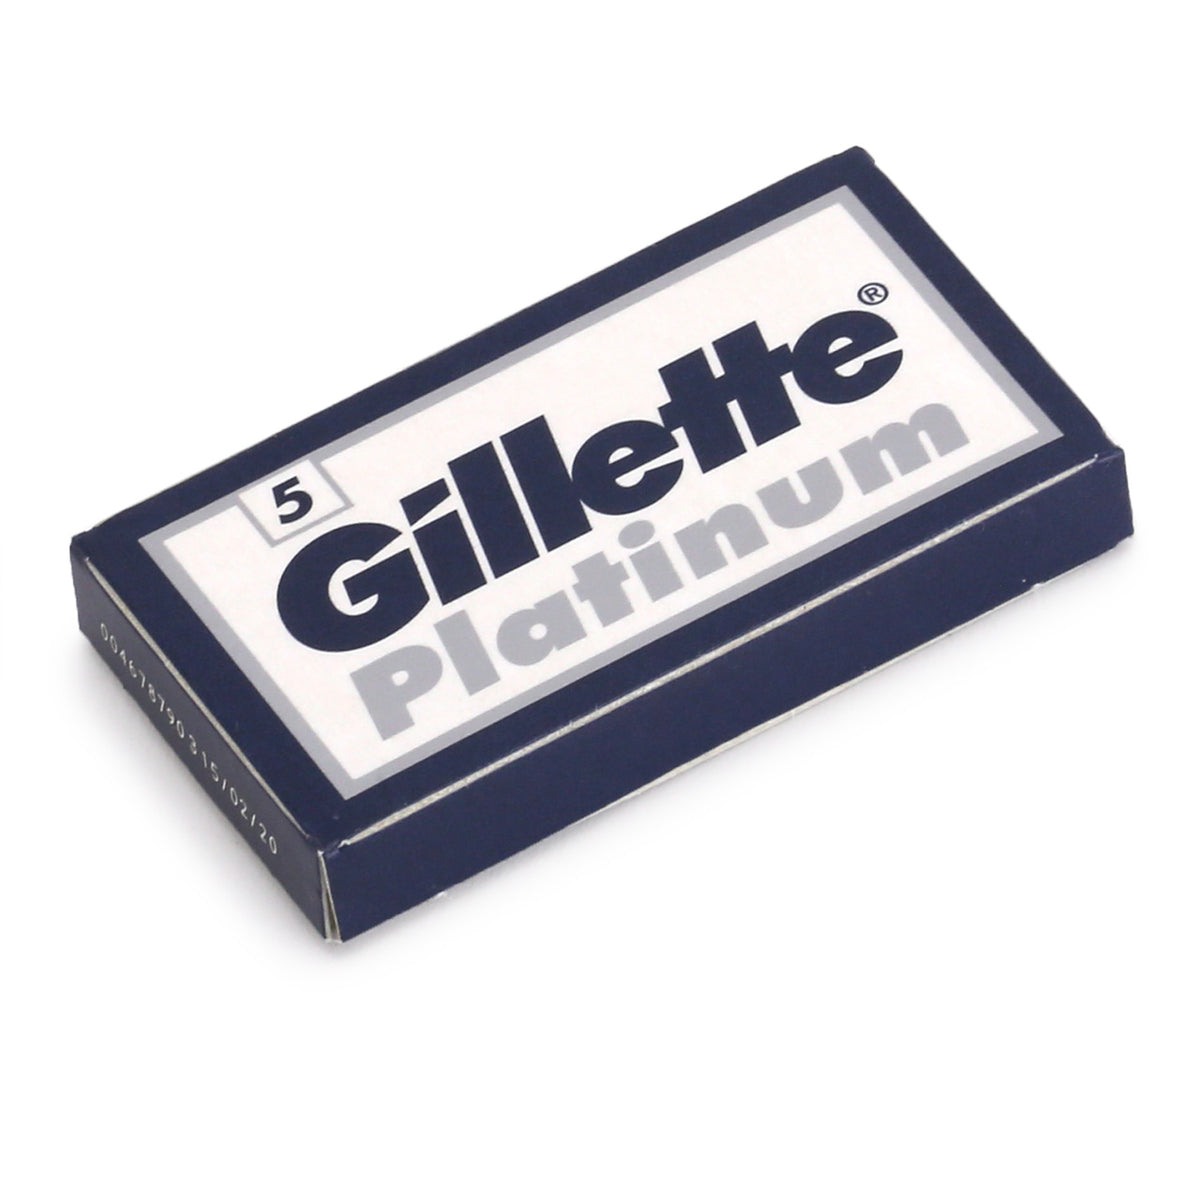 A tuck of 5 Gillette Platinum double-edge razor blades.